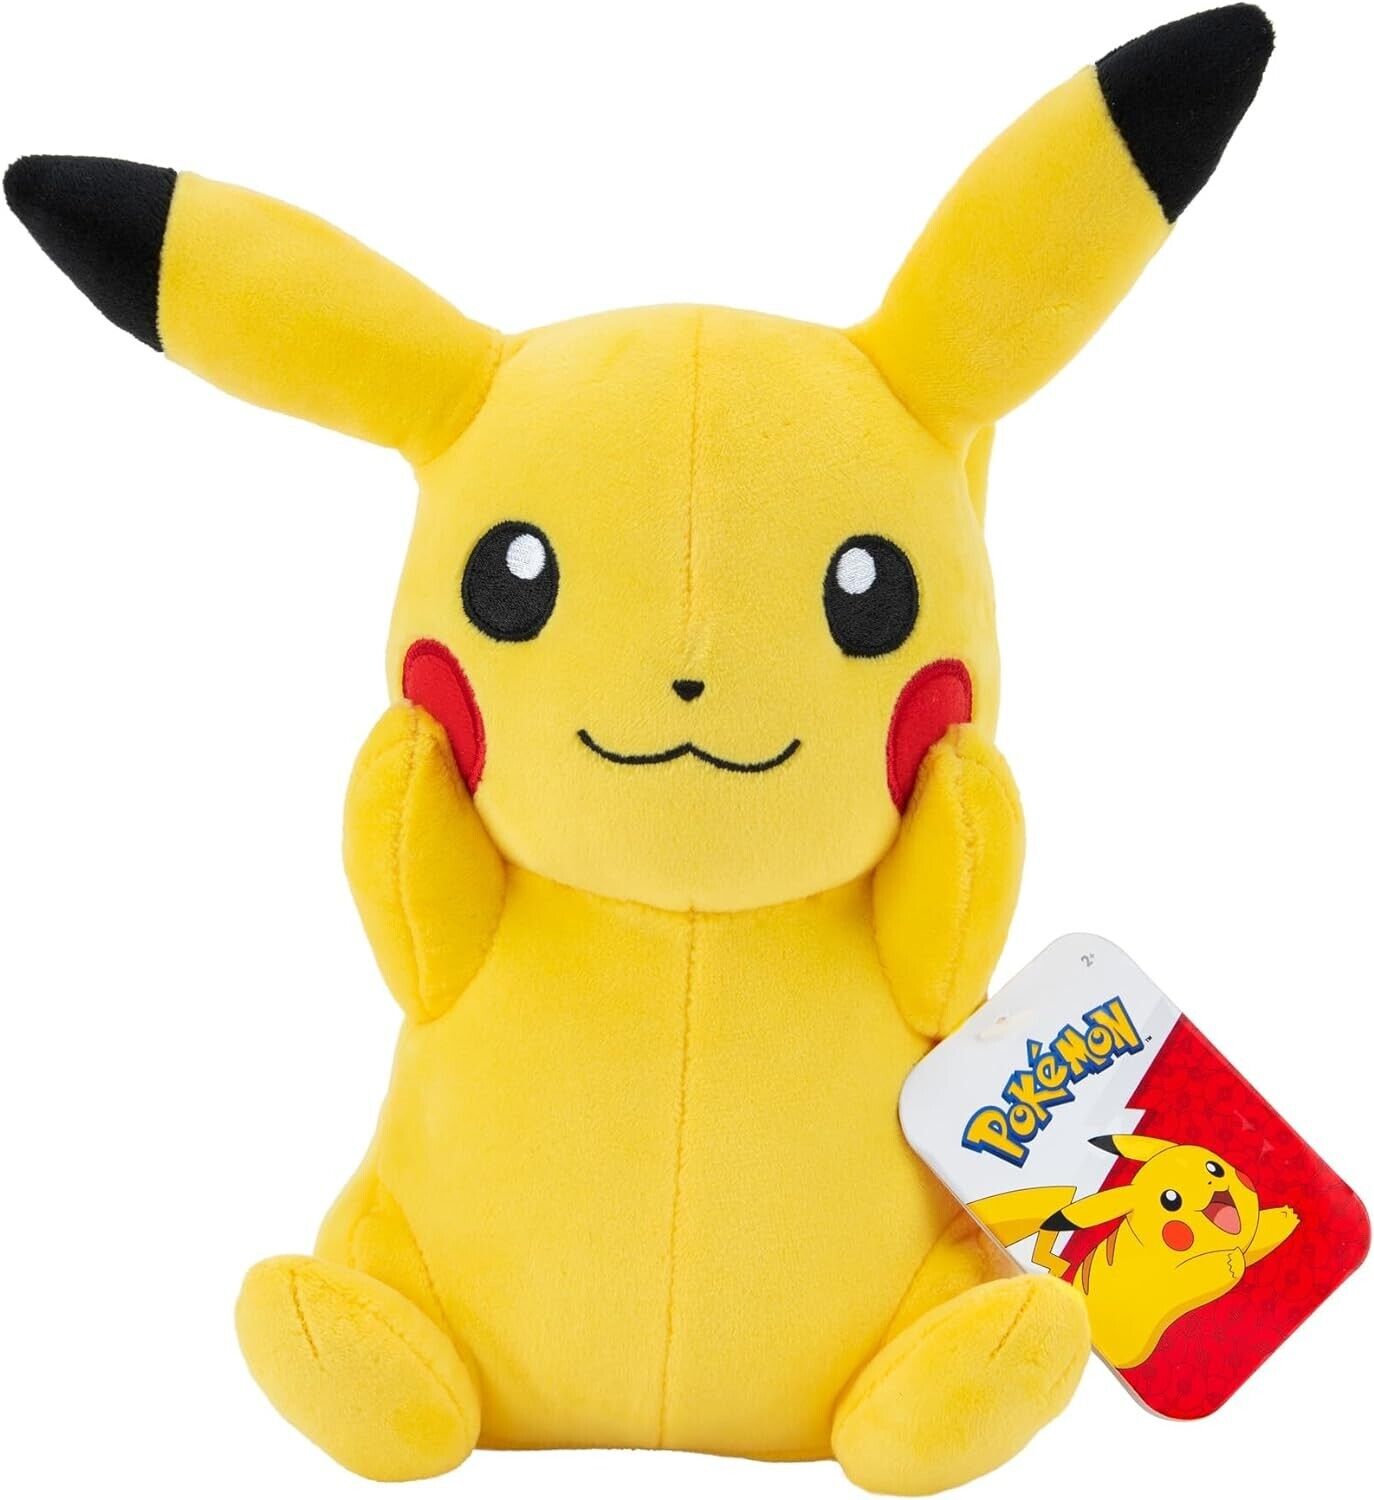 Pokémon Official and Premium Quality 8-inch Pikachu Plush - Adorable, Ultra-Soft